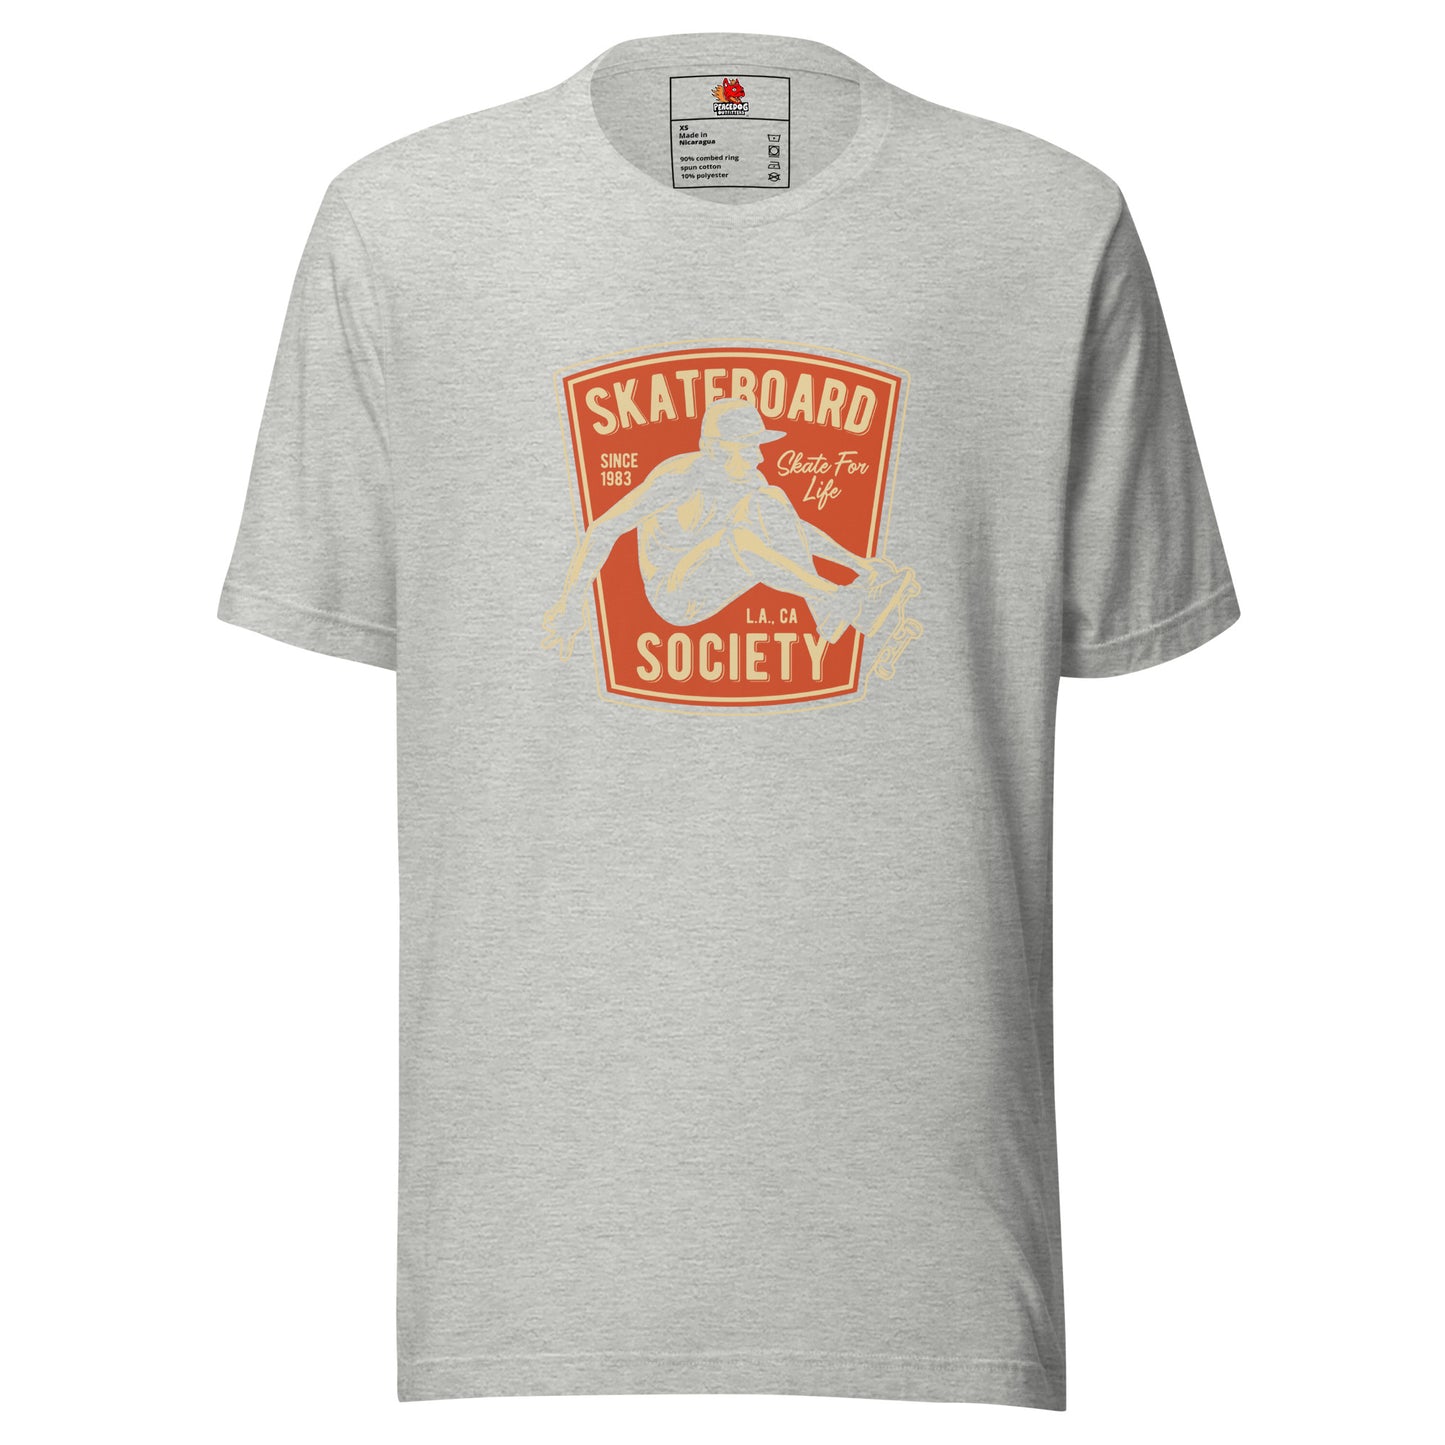 Skateboard Society T-shirt